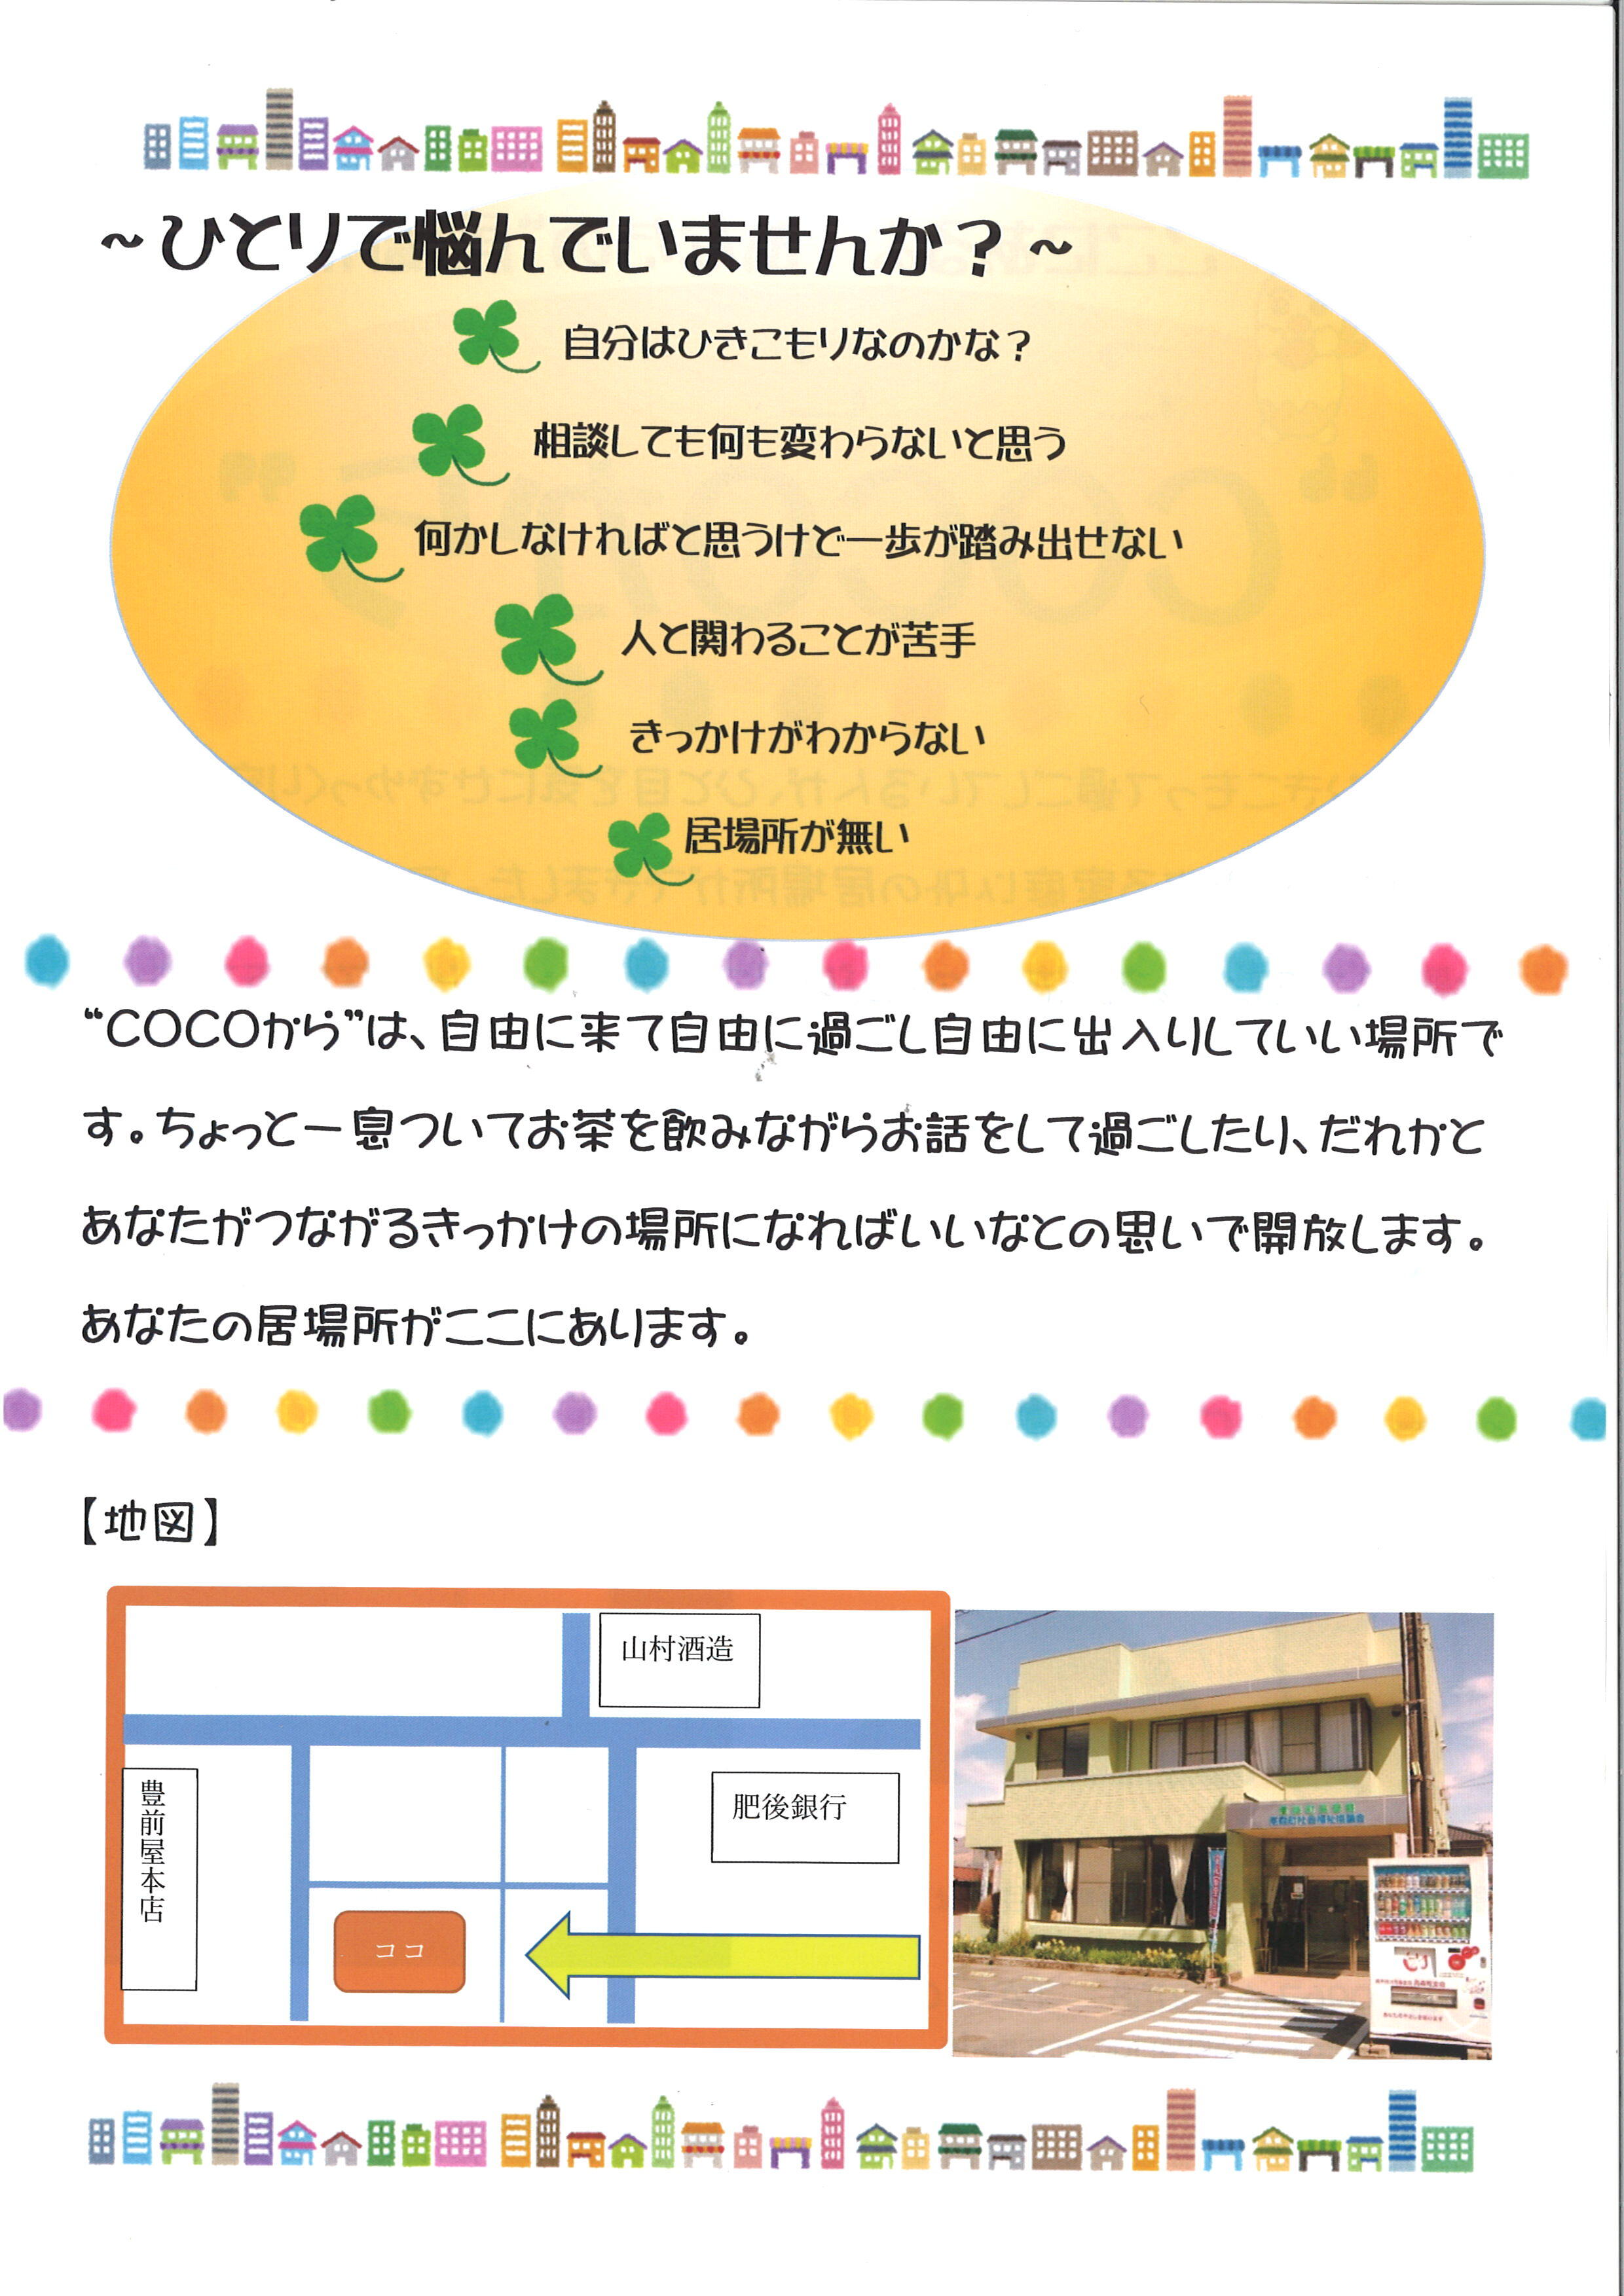 http://www.town.takamori.kumamoto.jp/chosha/somu/upload/2.jpg